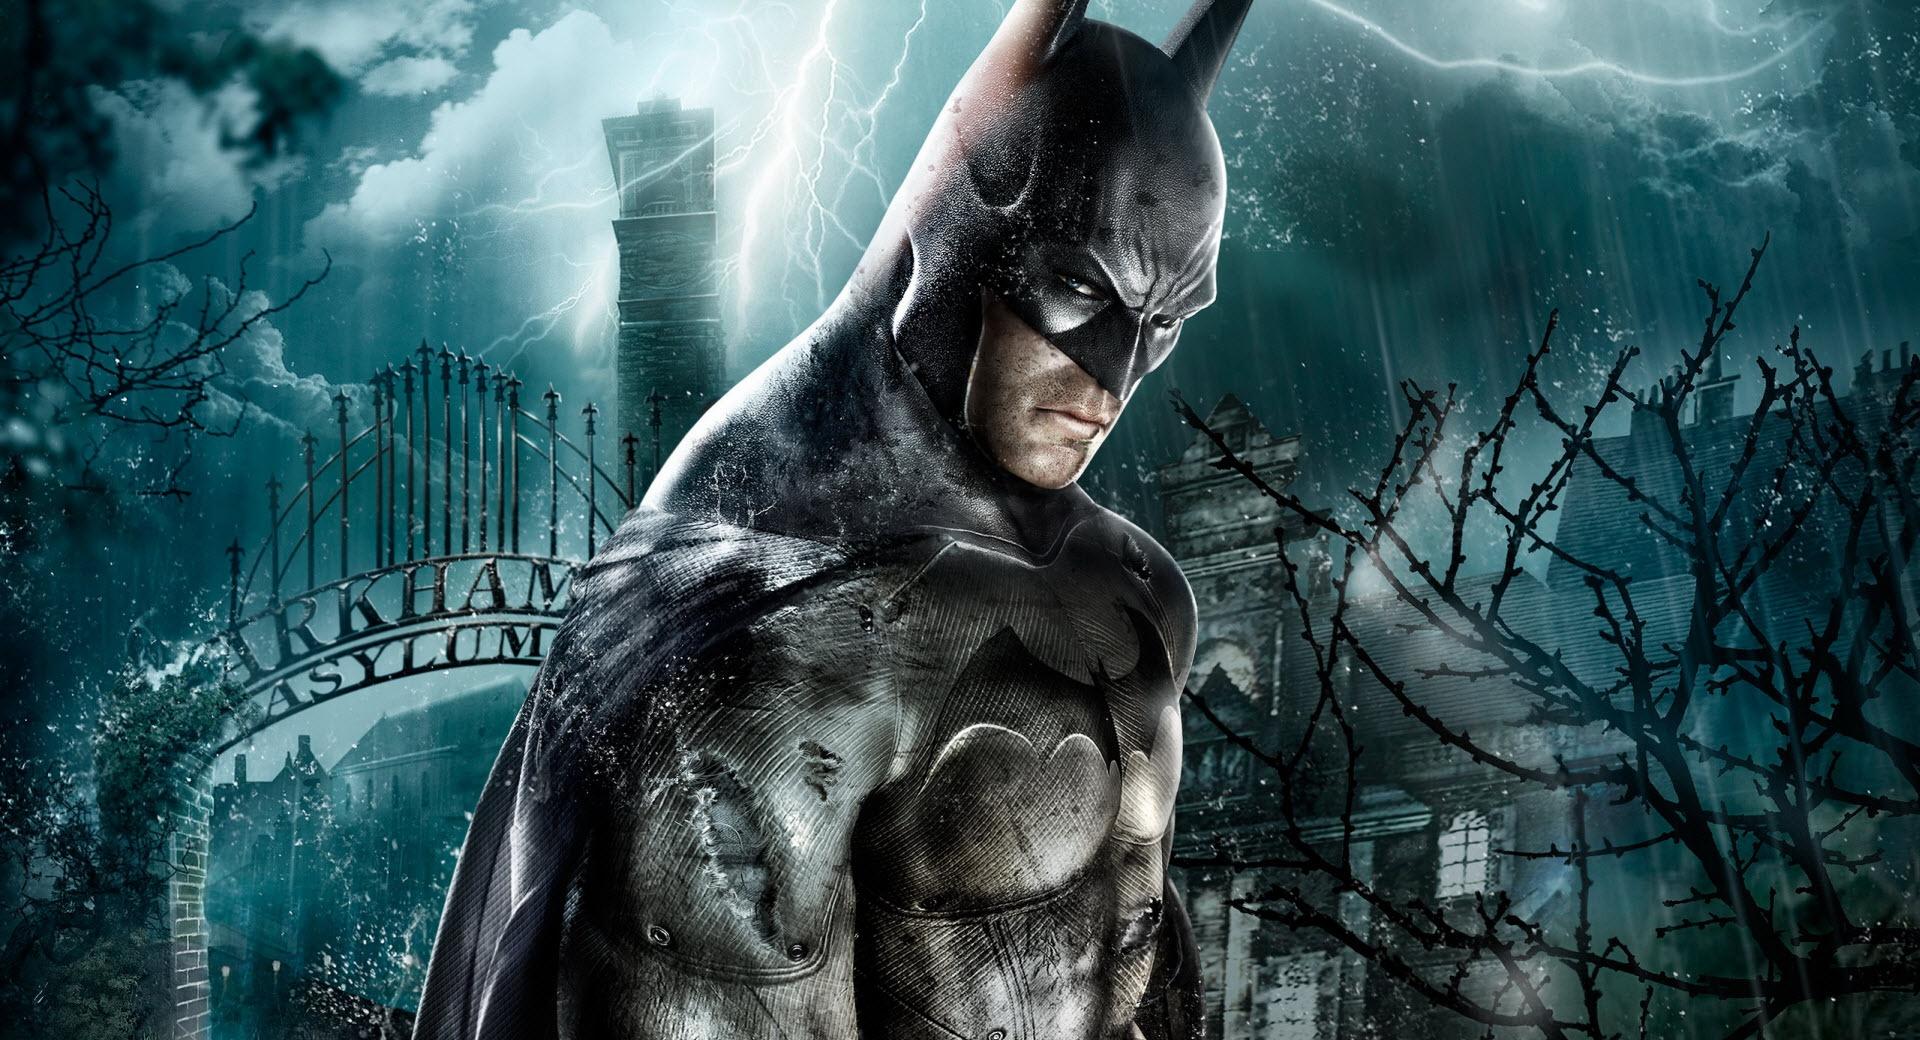 Batman Arkham Asylum Game at 1024 x 1024 iPad size wallpapers HD quality